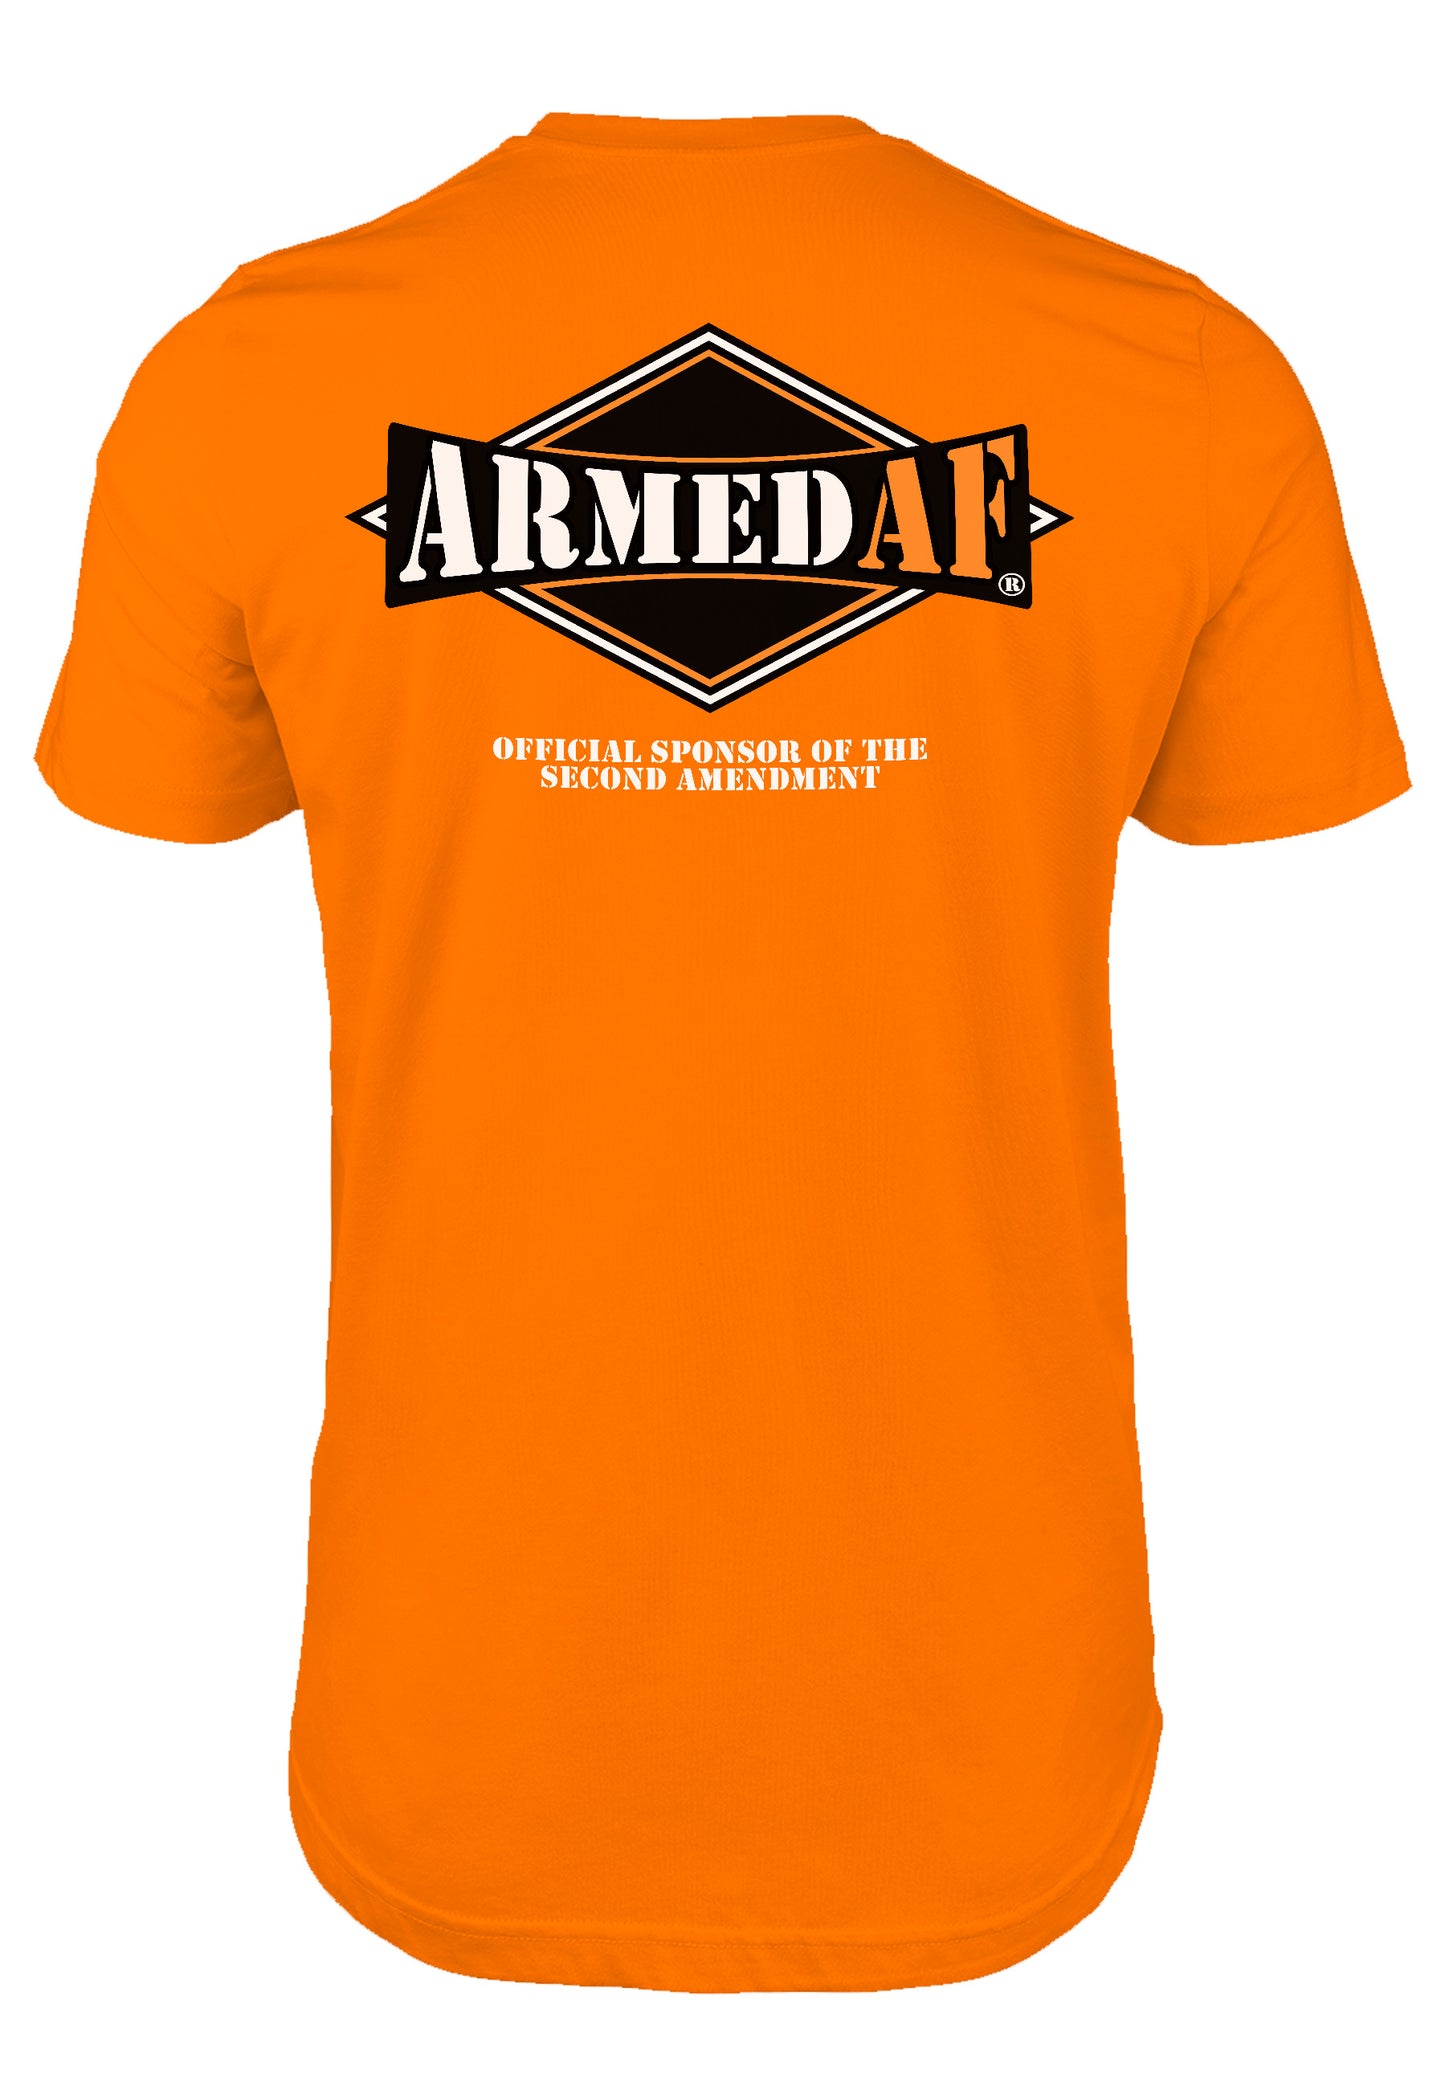 Second amendment logo t-shirt from ArmedAF® brand